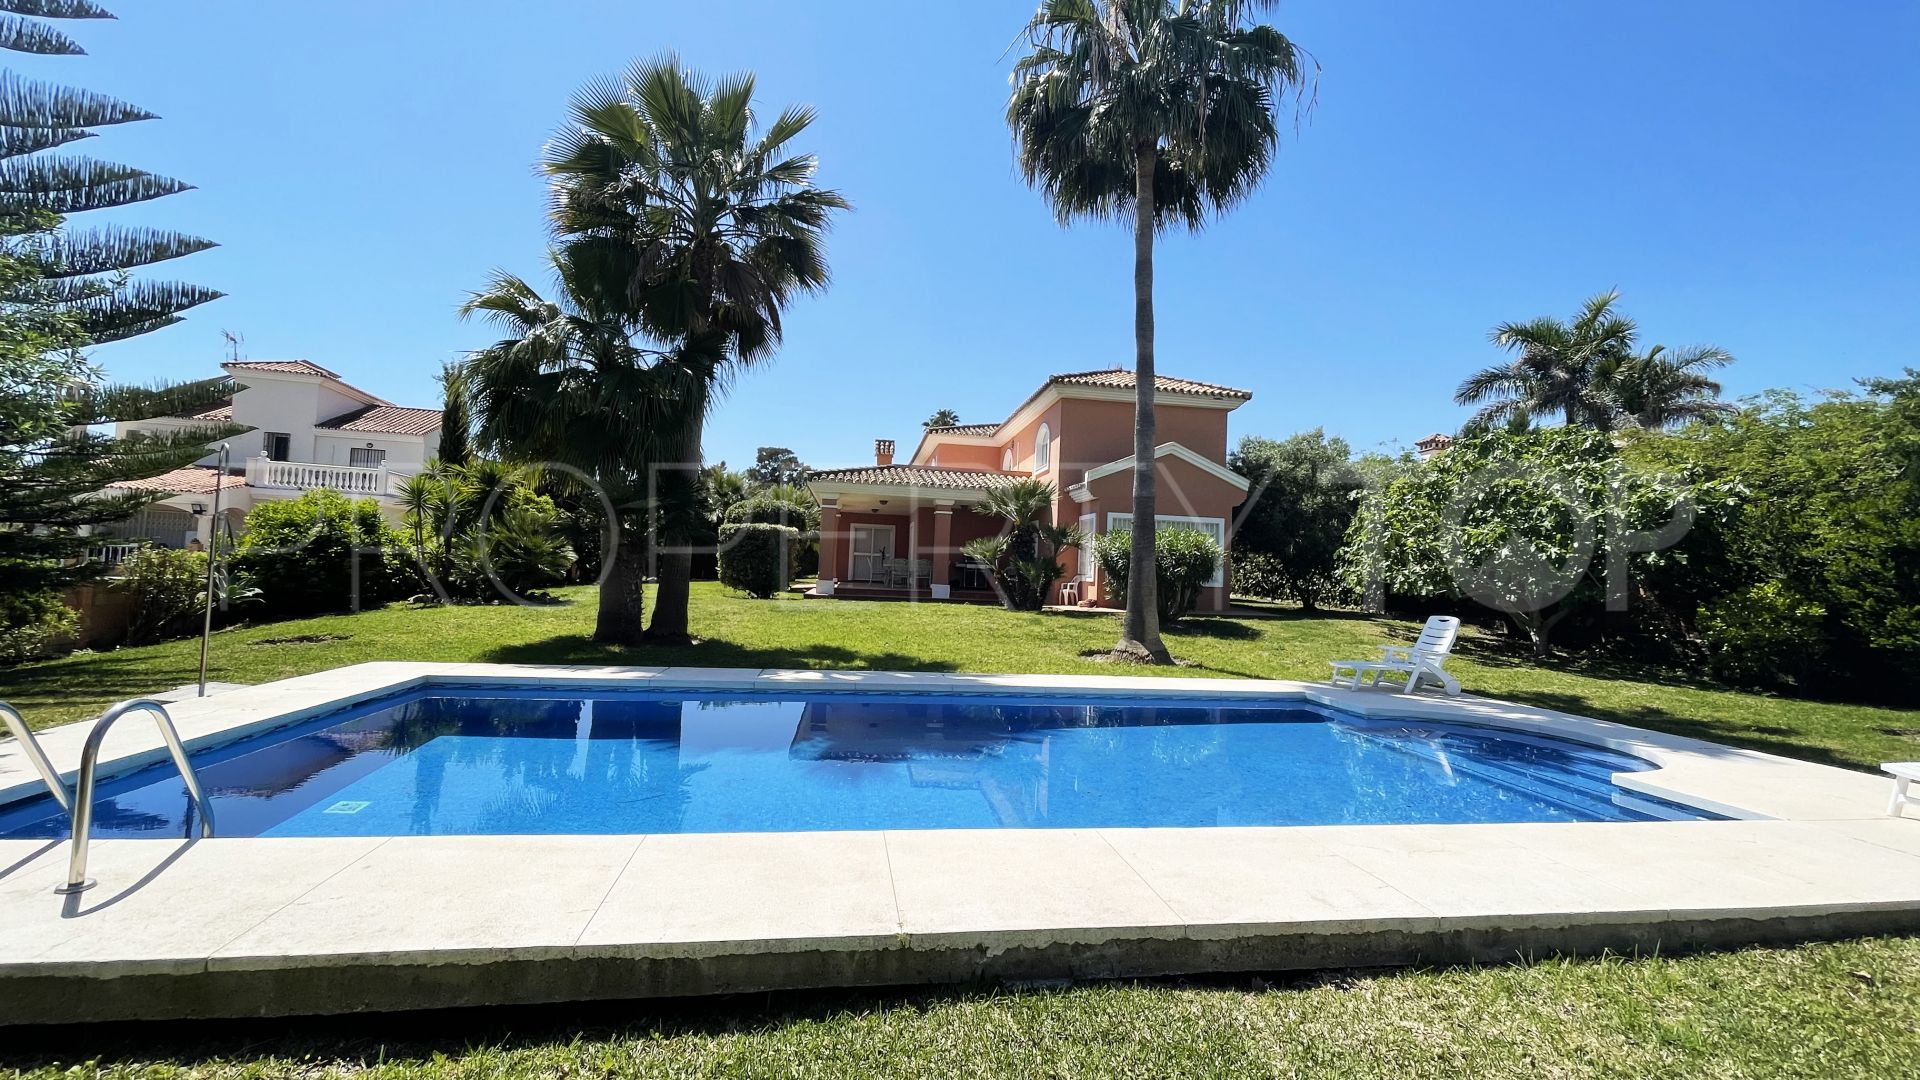 For sale Guadalobon villa with 4 bedrooms